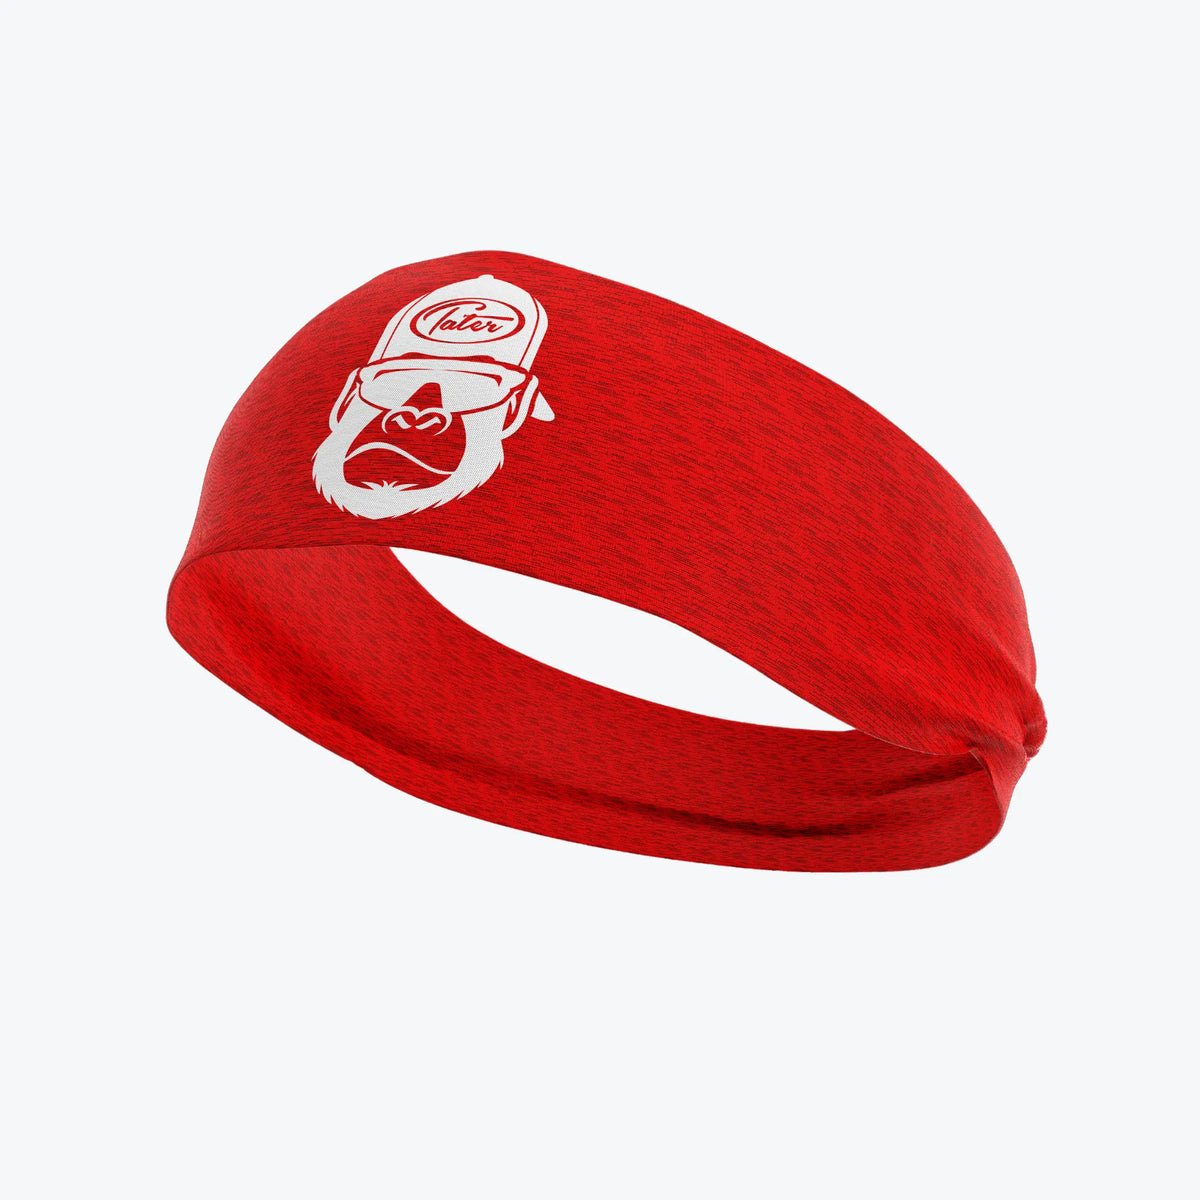 Red Kong Headband